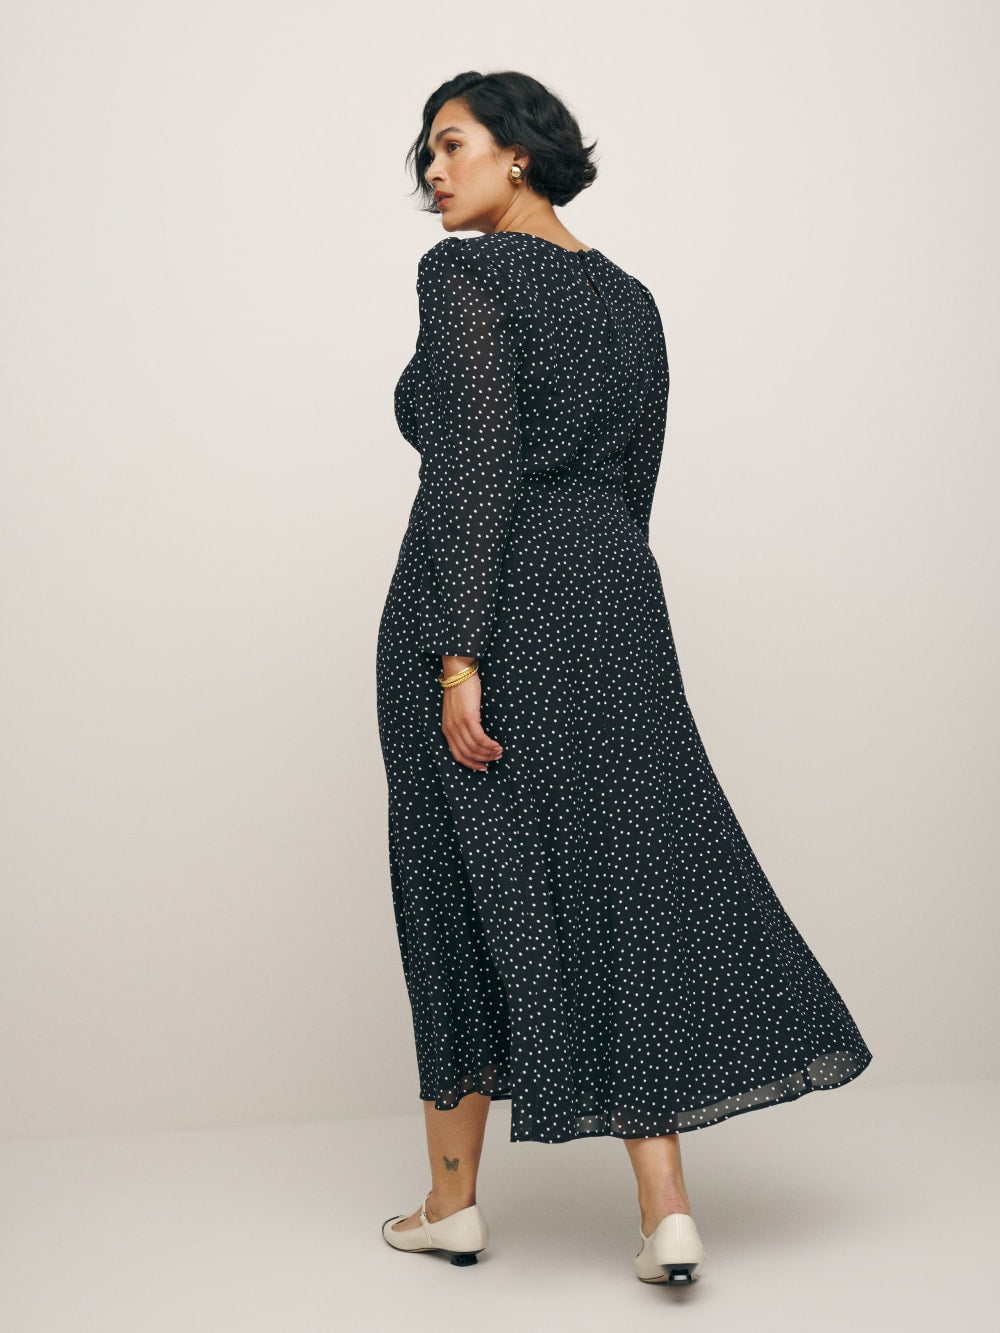 Reformation Plus Size Long Sleeve Polka Dot Dress